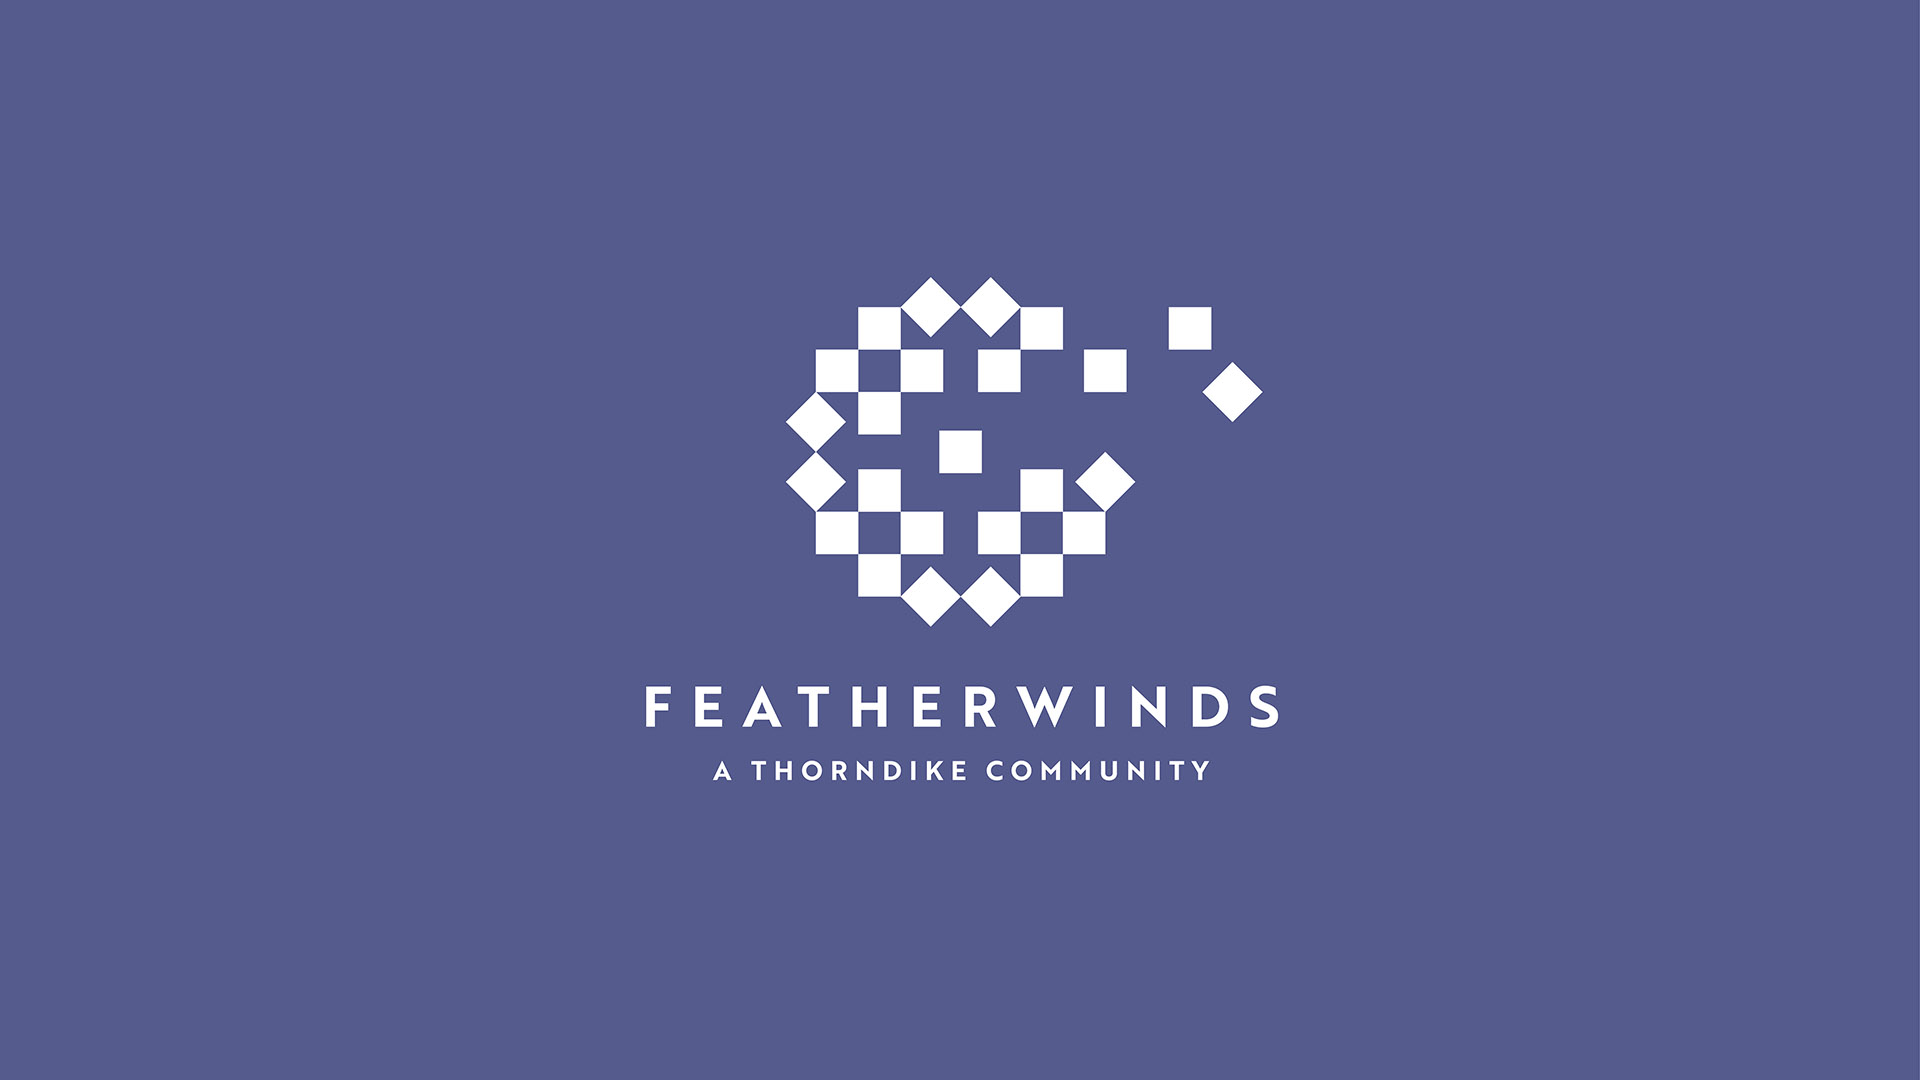 featherwinds white logo on purple